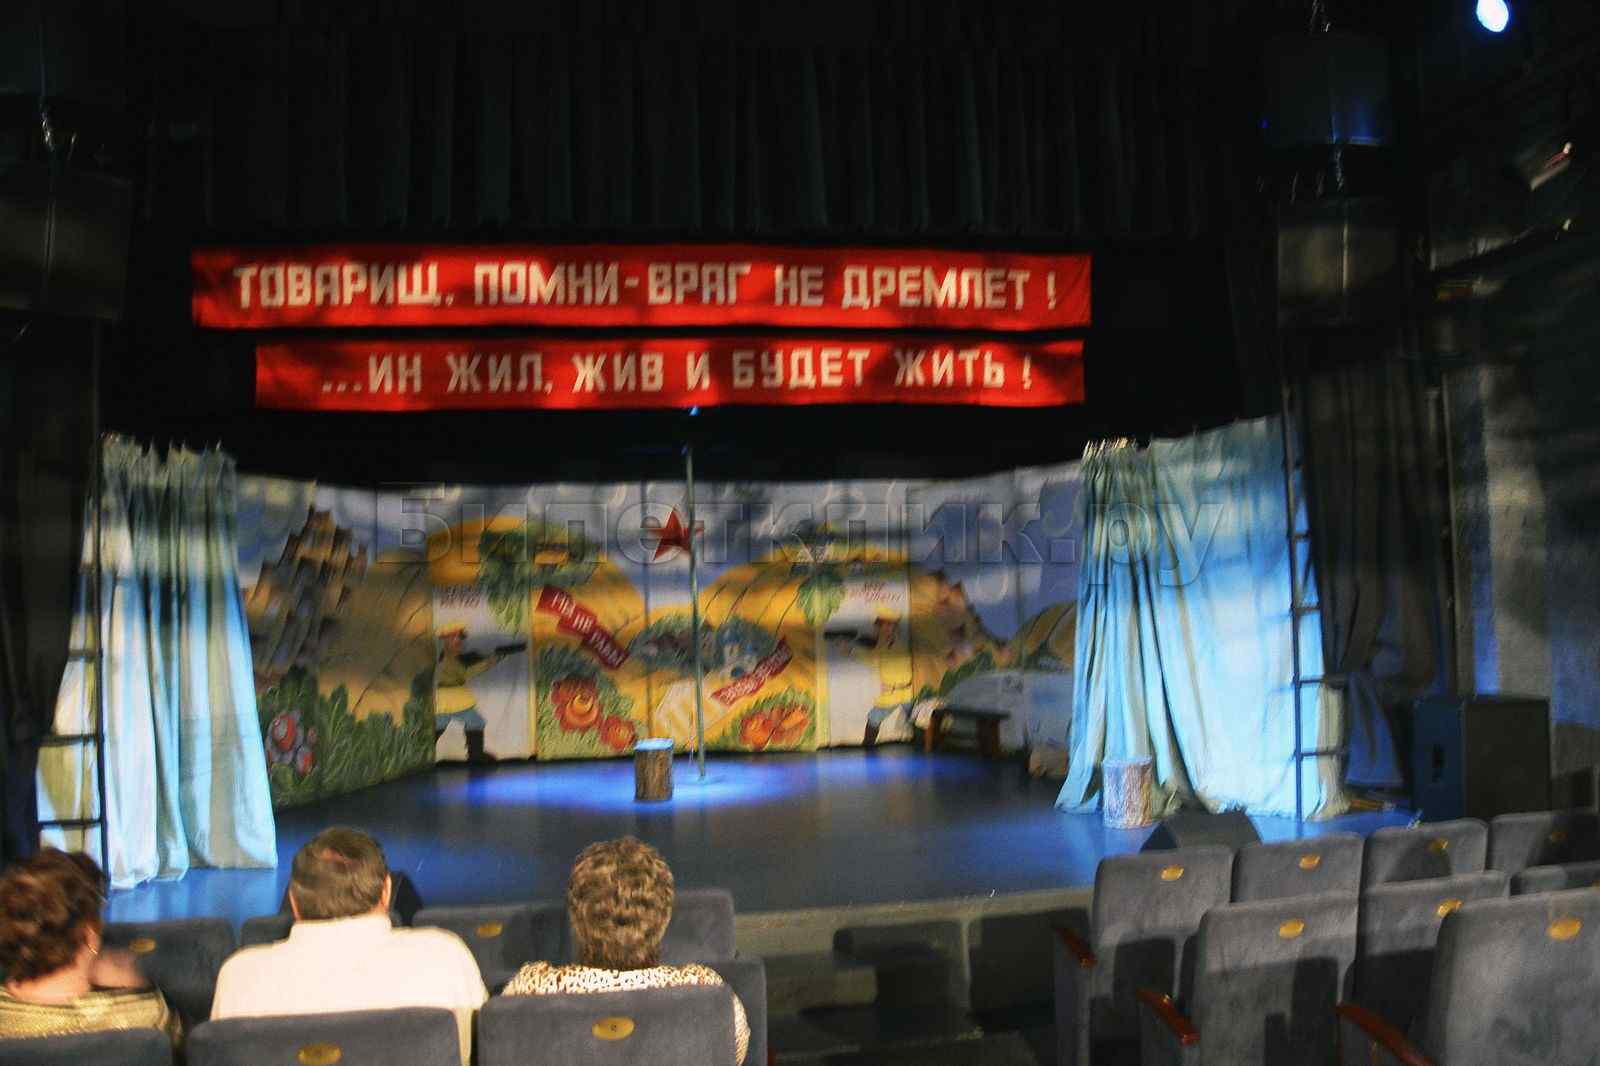 Театр музыки и драмы Стаса Намина